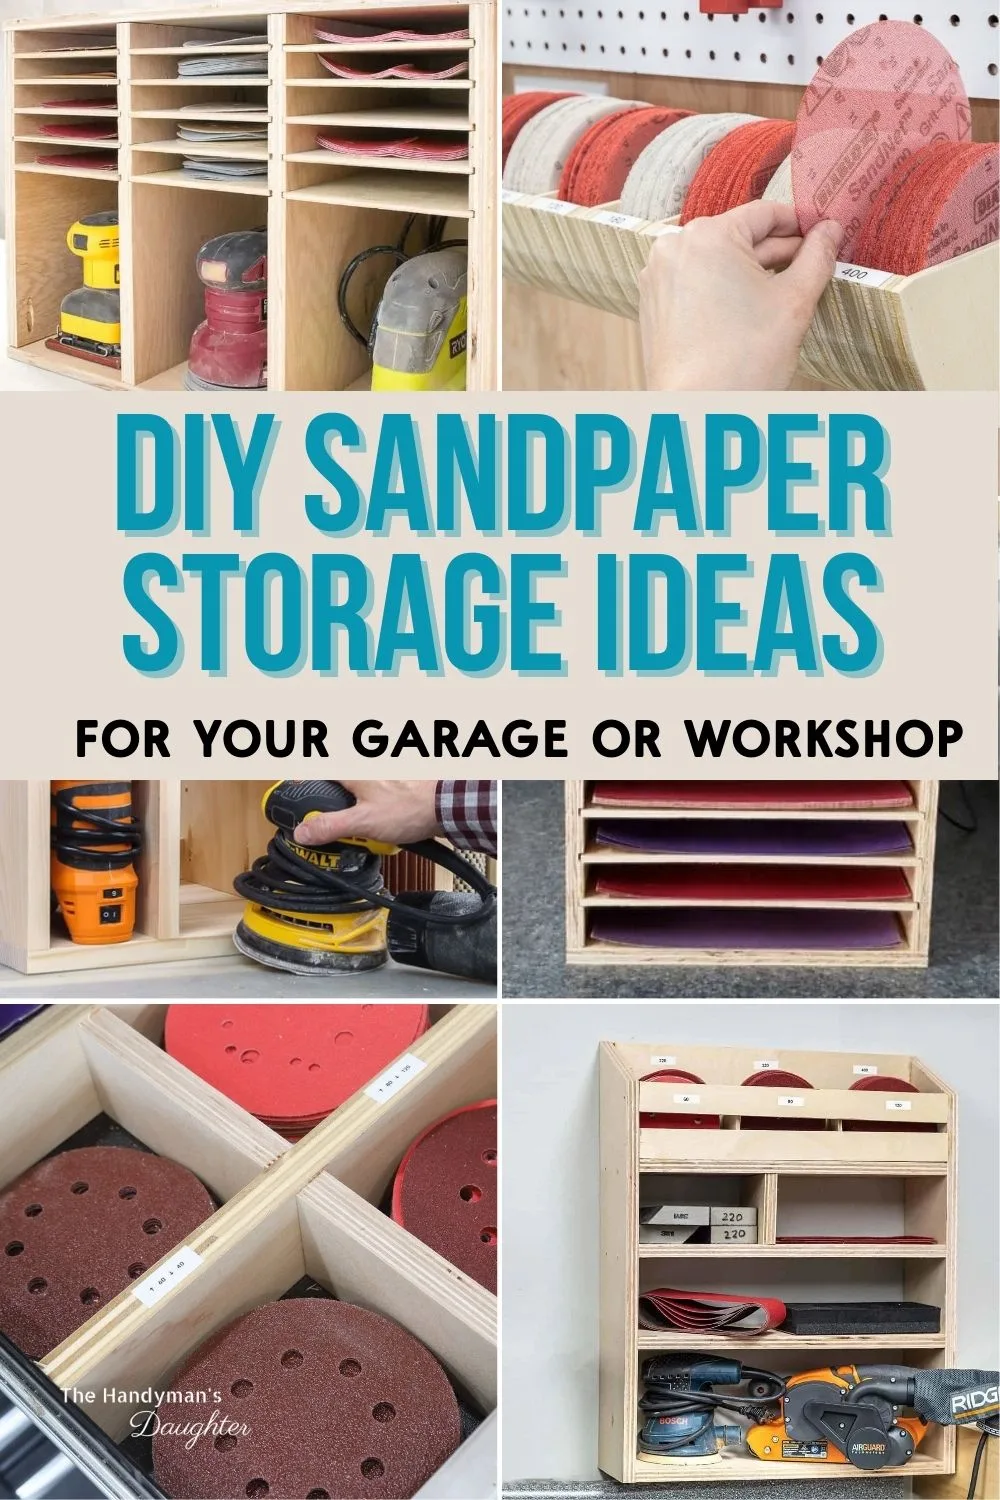 Sandpaper Storage Rack 